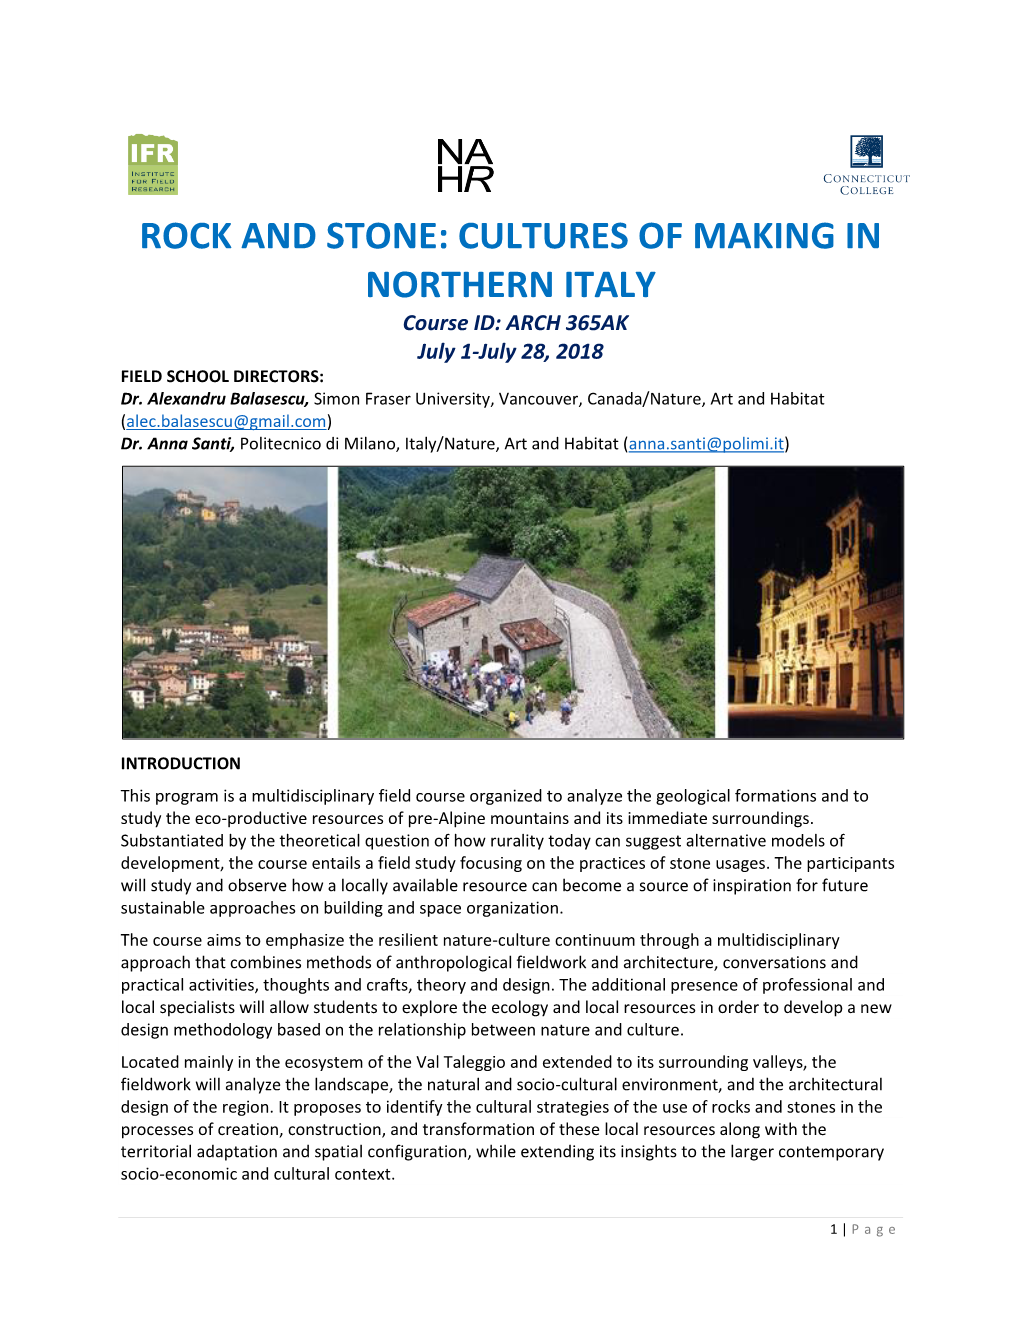 Syllabus-Italy Bergamo Rock and Stone 2018